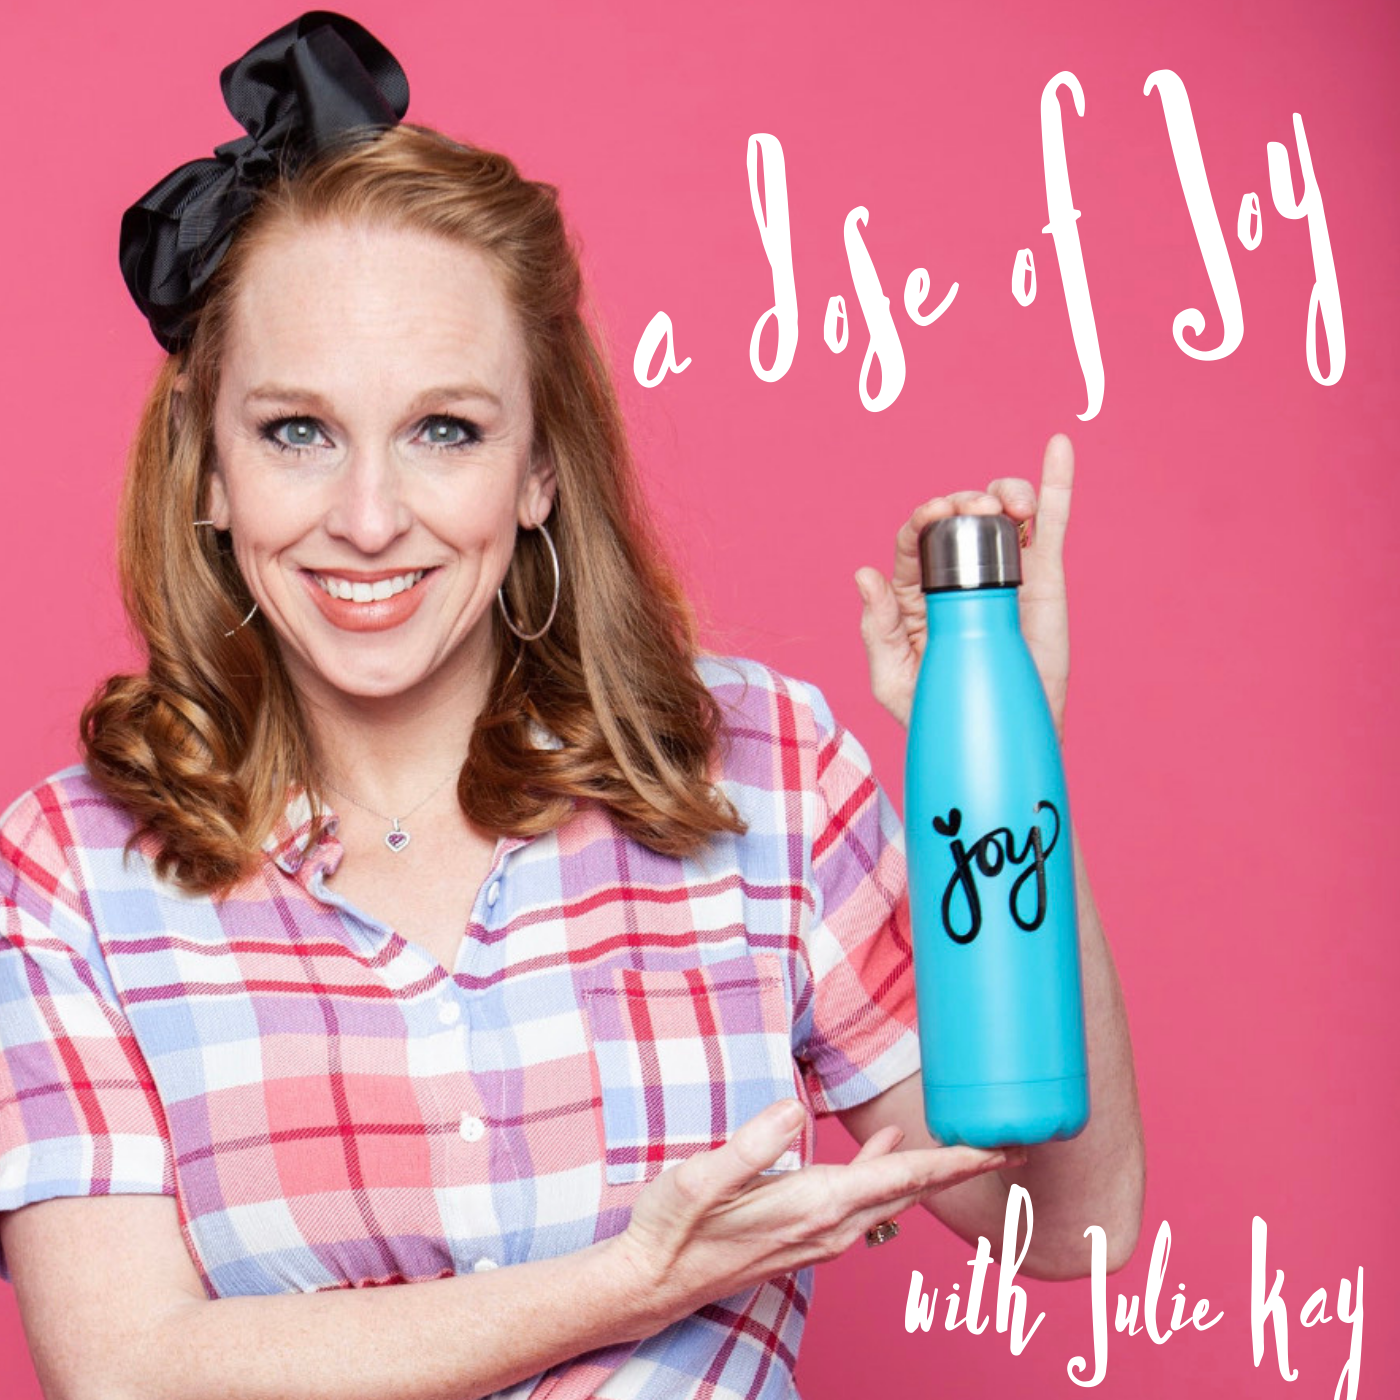 Dose of Joy with Julie Kay